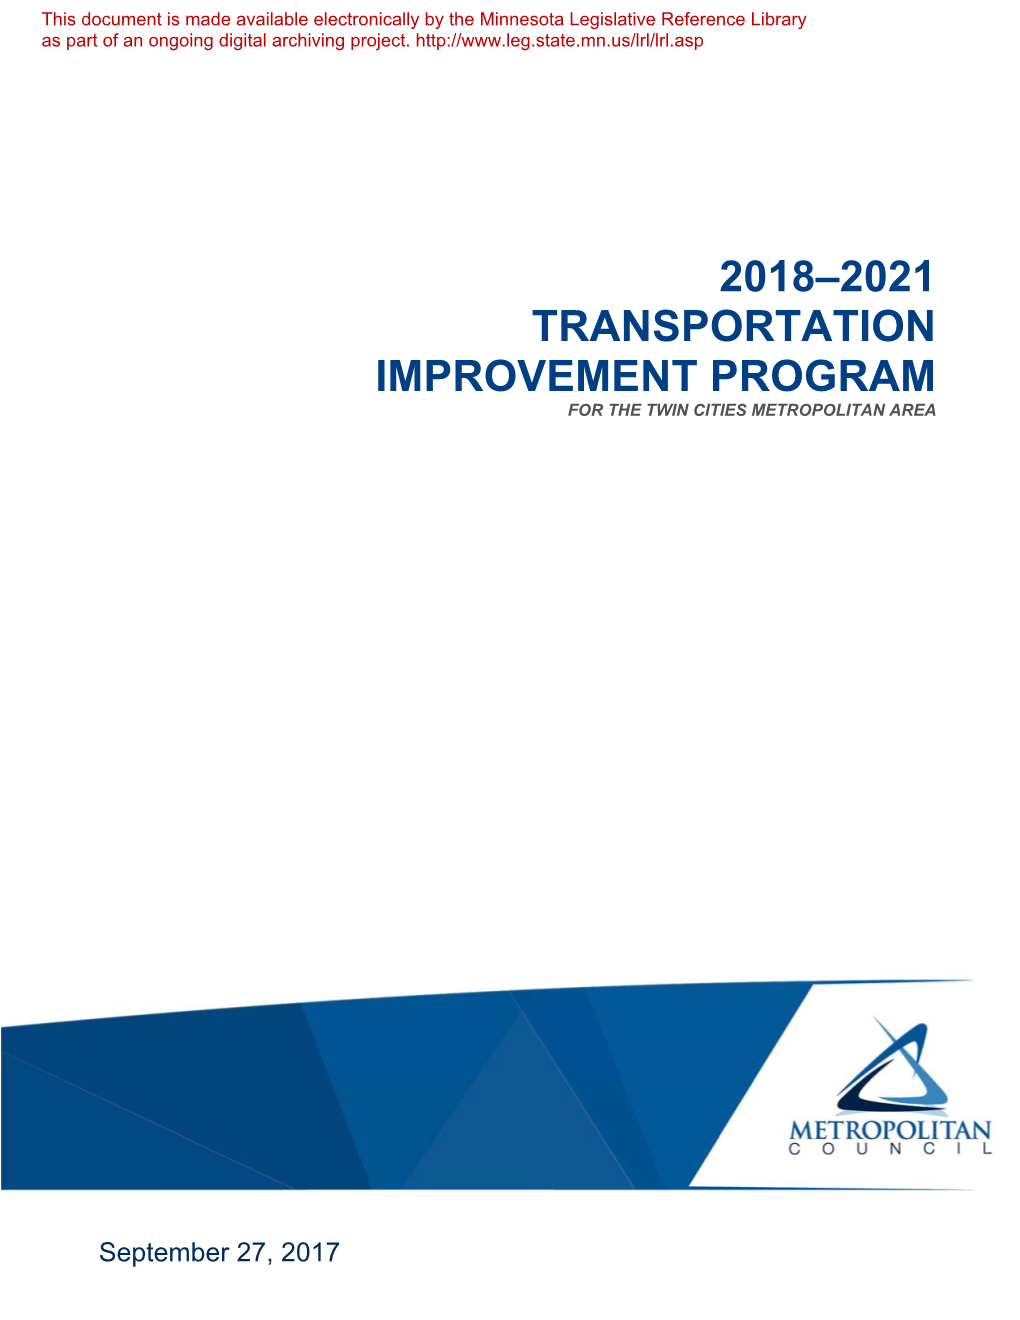 2018–2021 Transportation Improvement Program for the Twin Cities Metropolitan Area